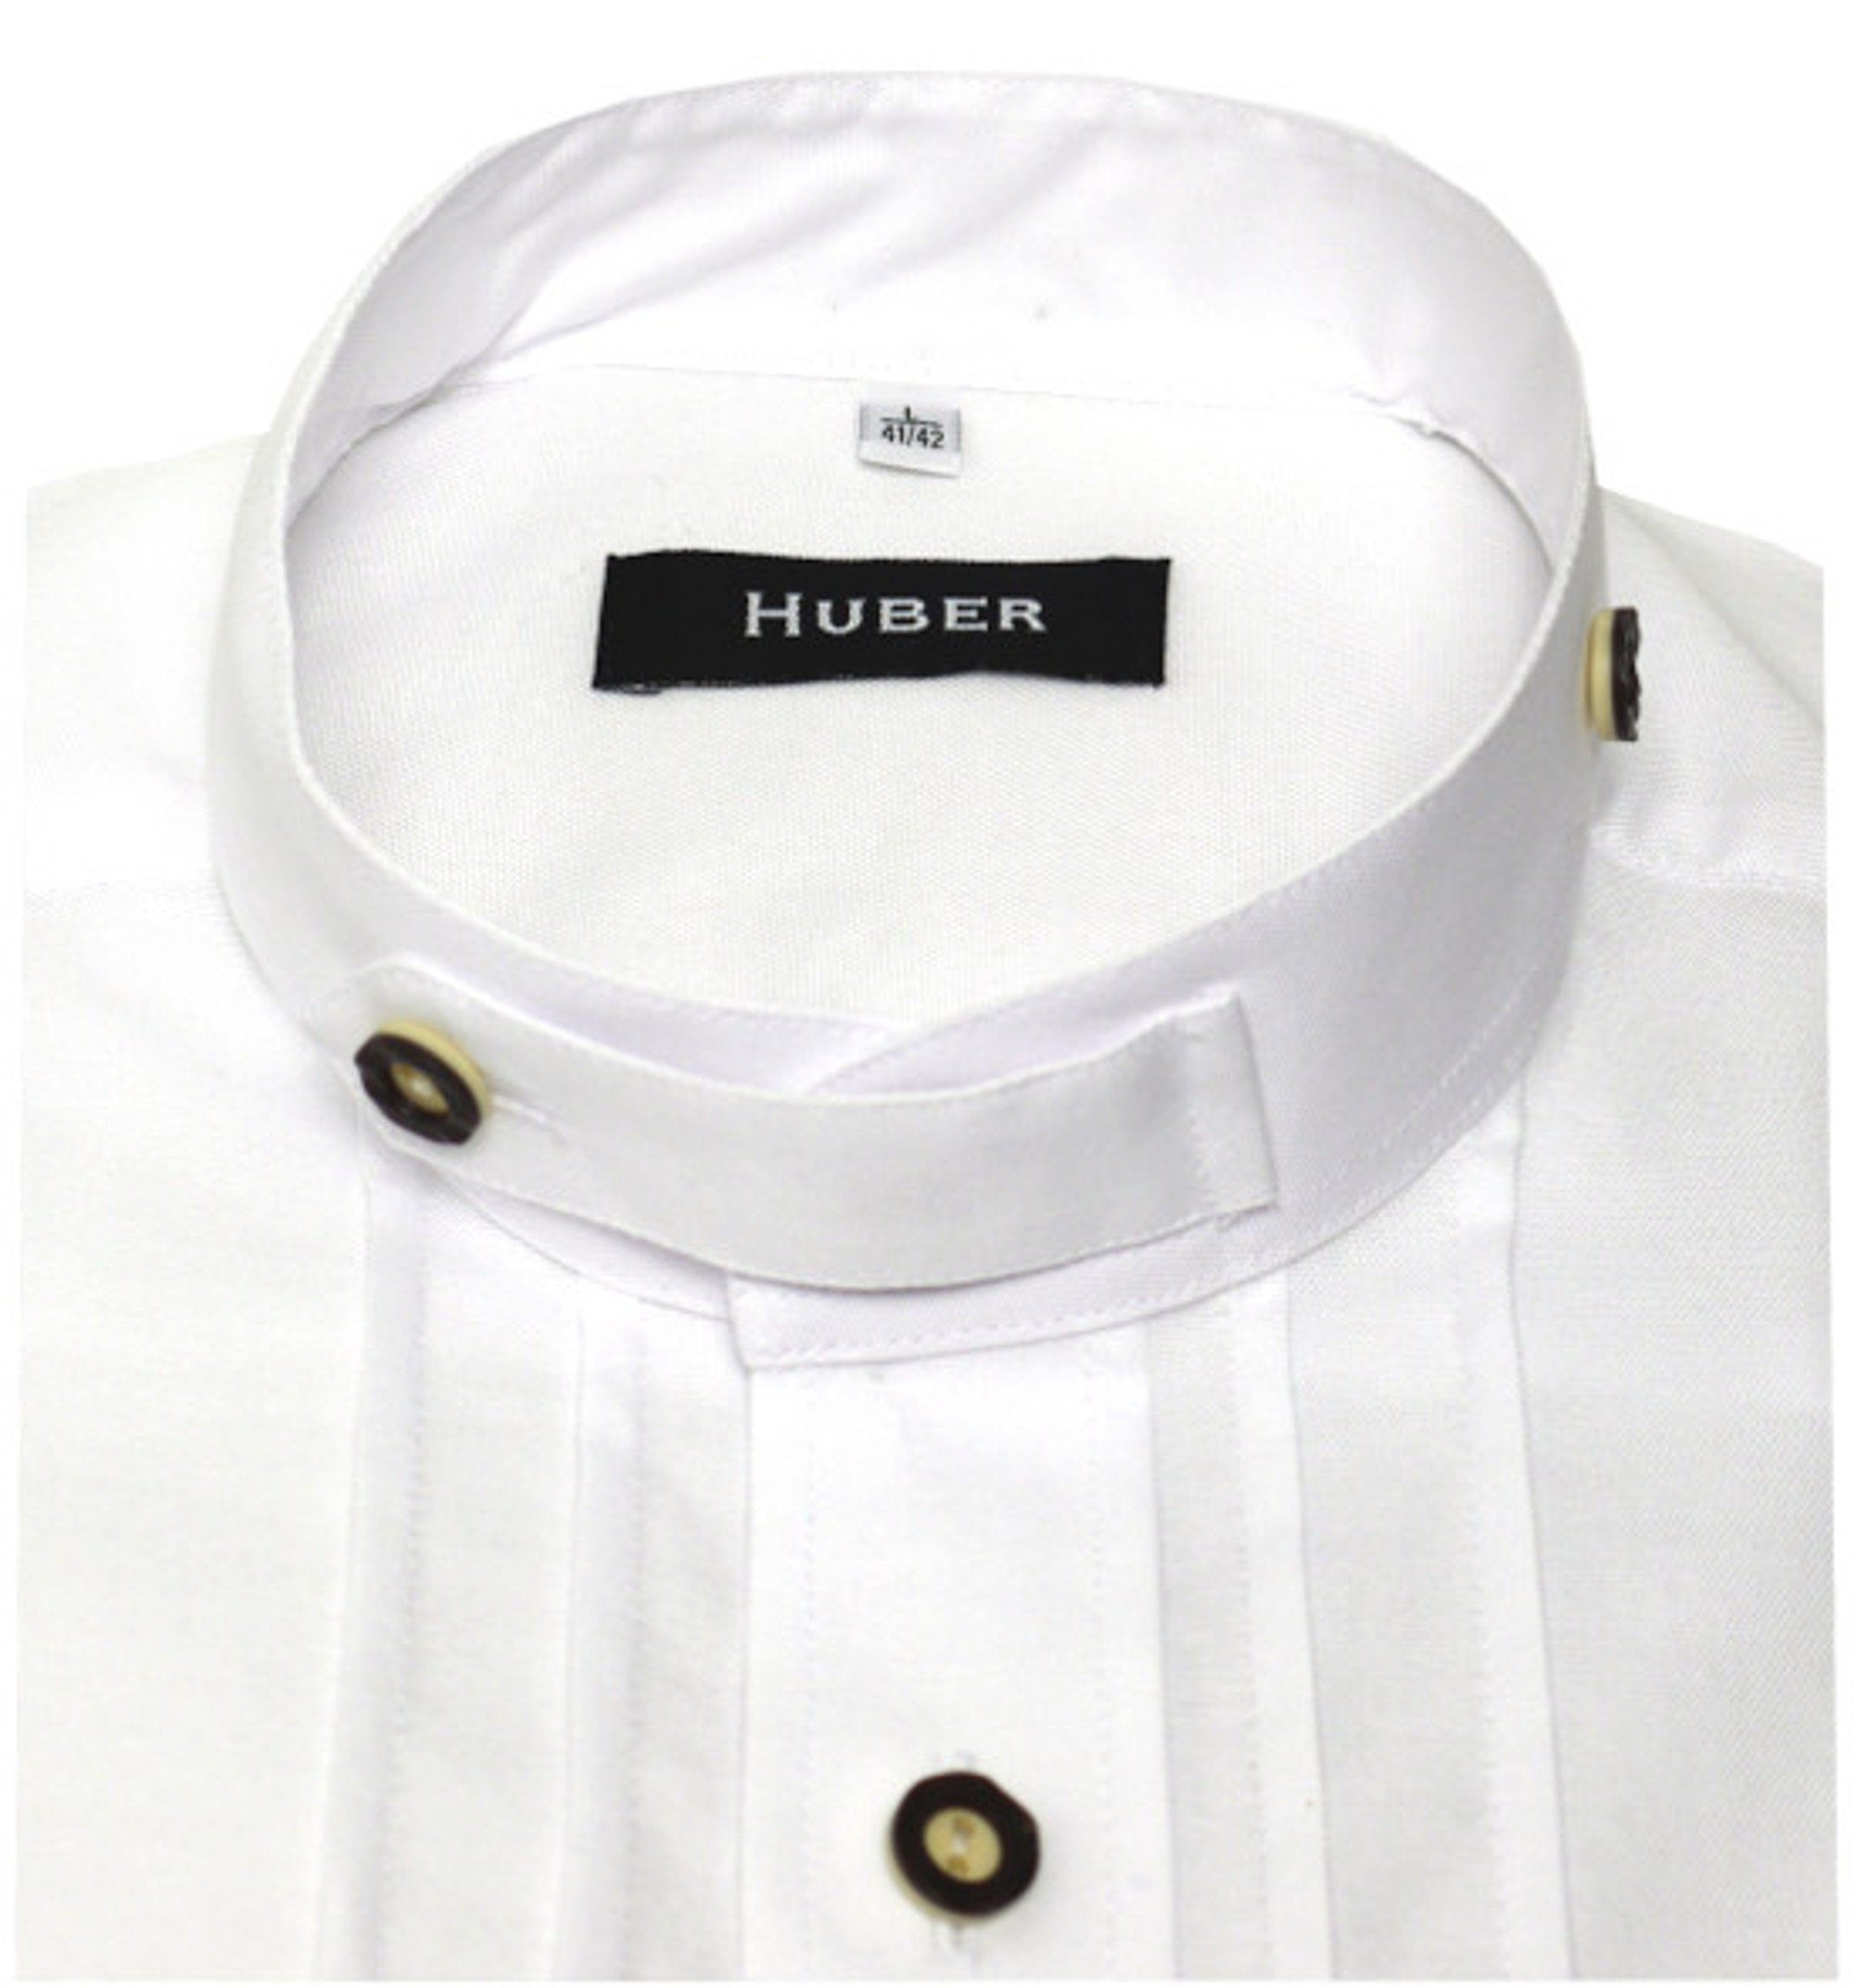 Regular/Comfort-gerader Stehkragen HU-0705 Plissee/Biesen Schnitt Huber Hemden Trachtenhemd